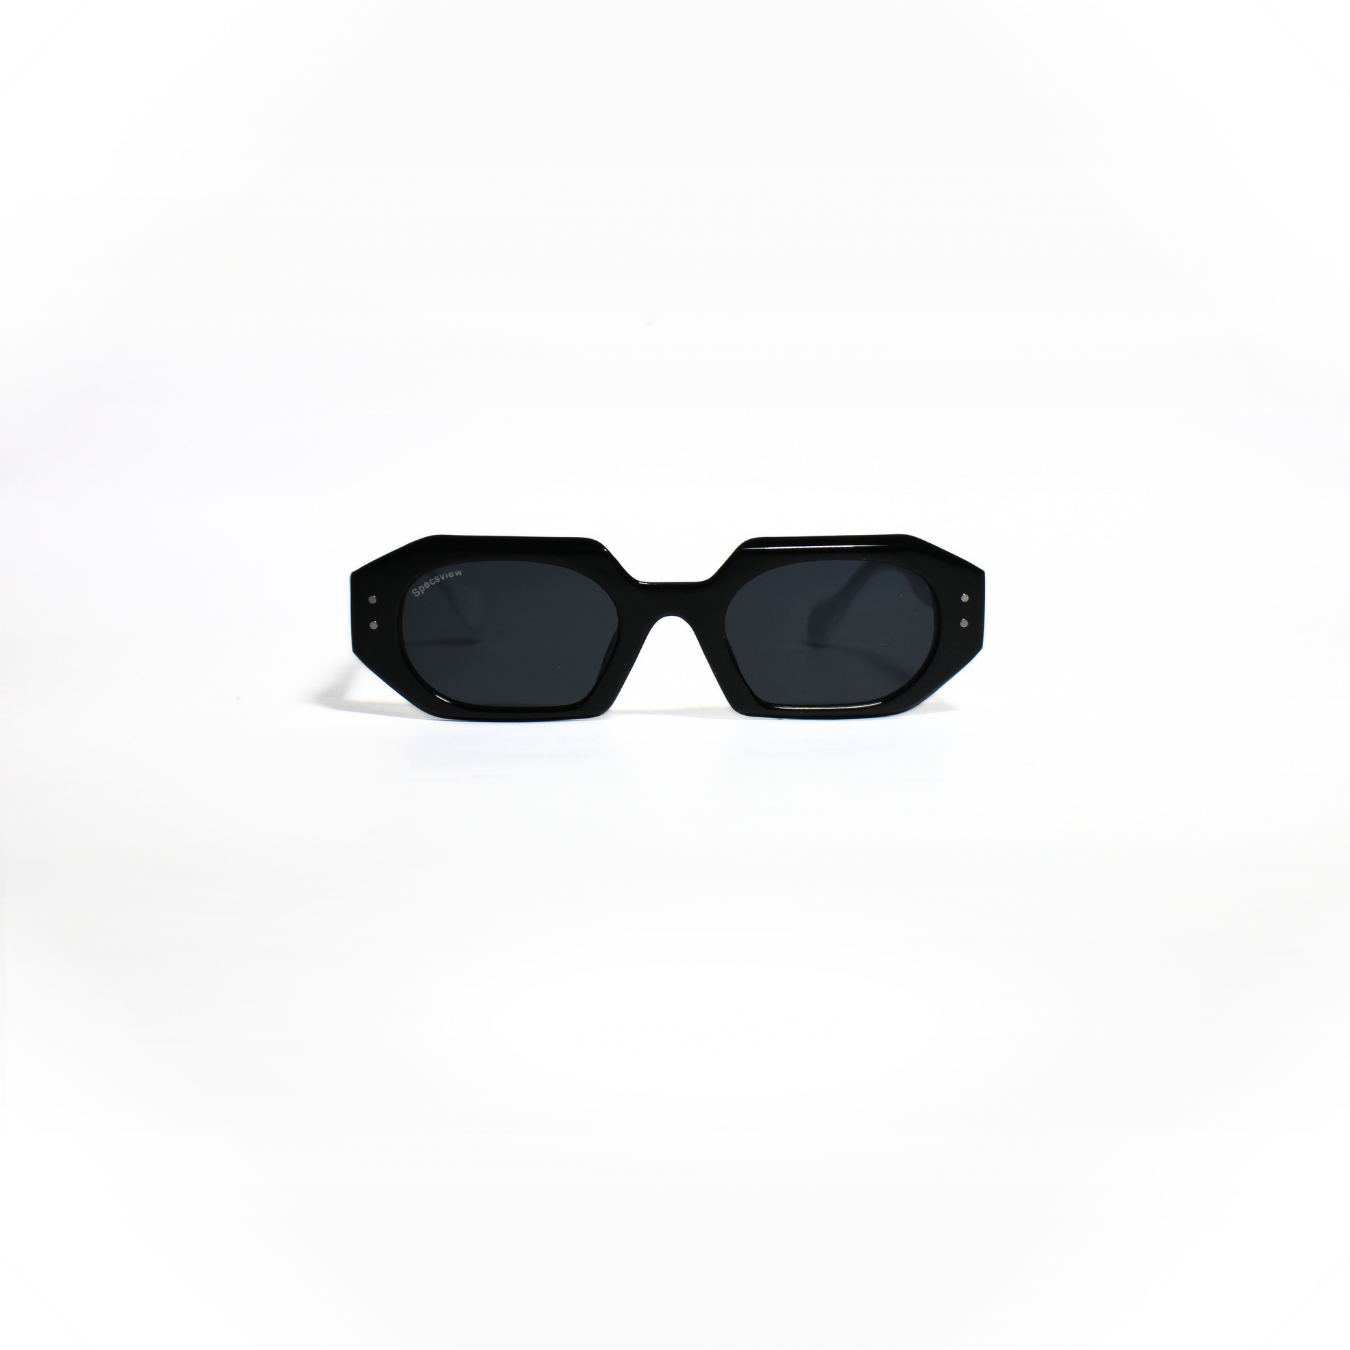 NOAH 001 I Sunglasses for Men and Women - Specsview